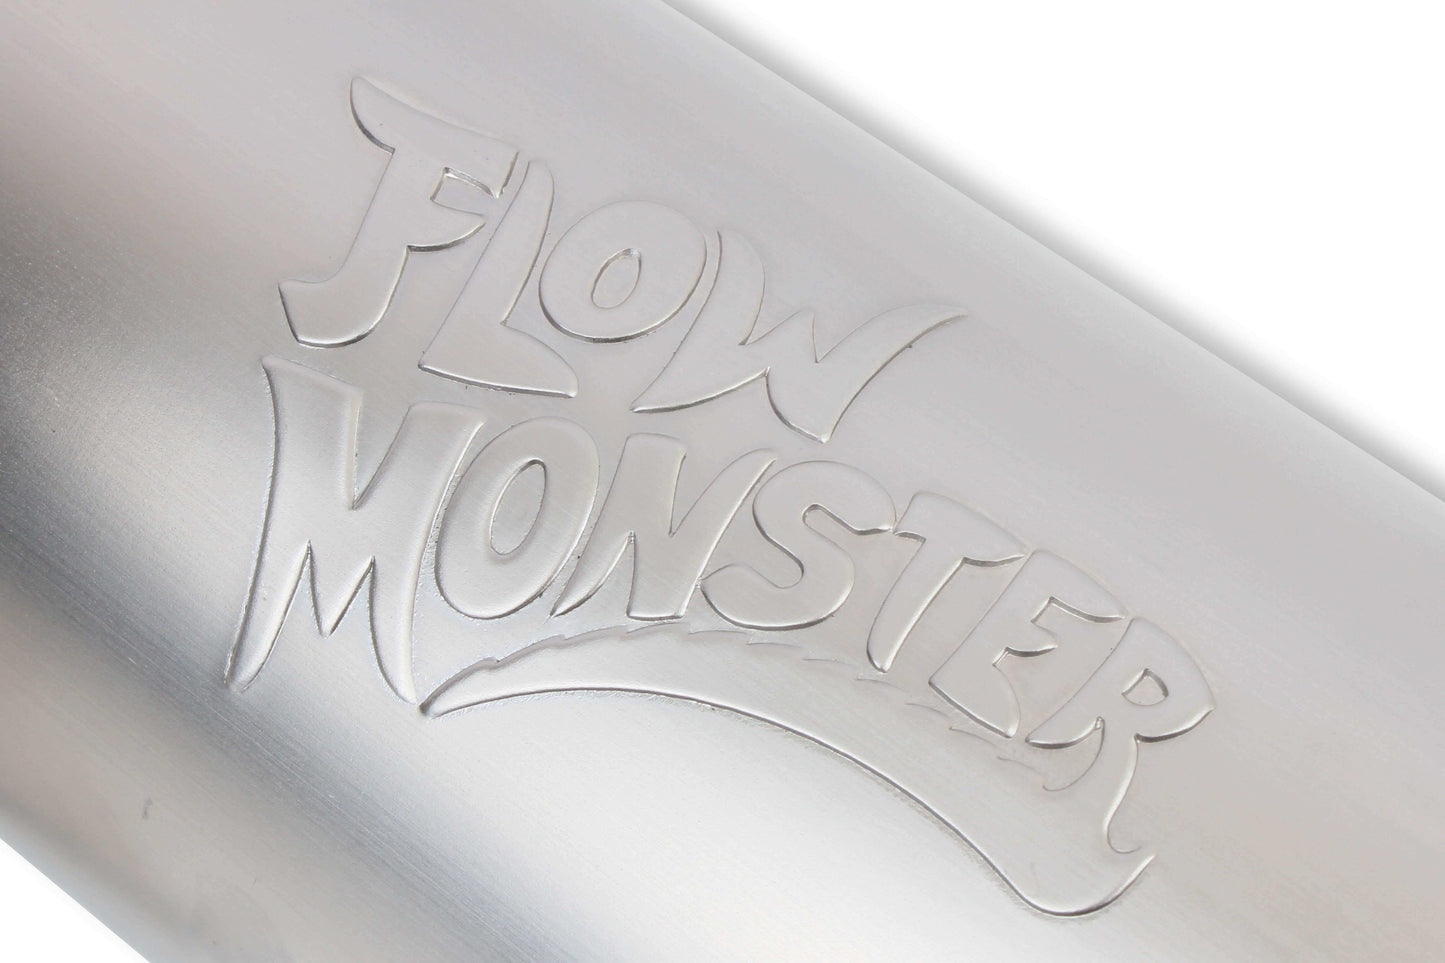 Flowmonster Round Performance Muffler 2.50 Inlet/ 2.50 Outlet 10416-FM 409 Stain